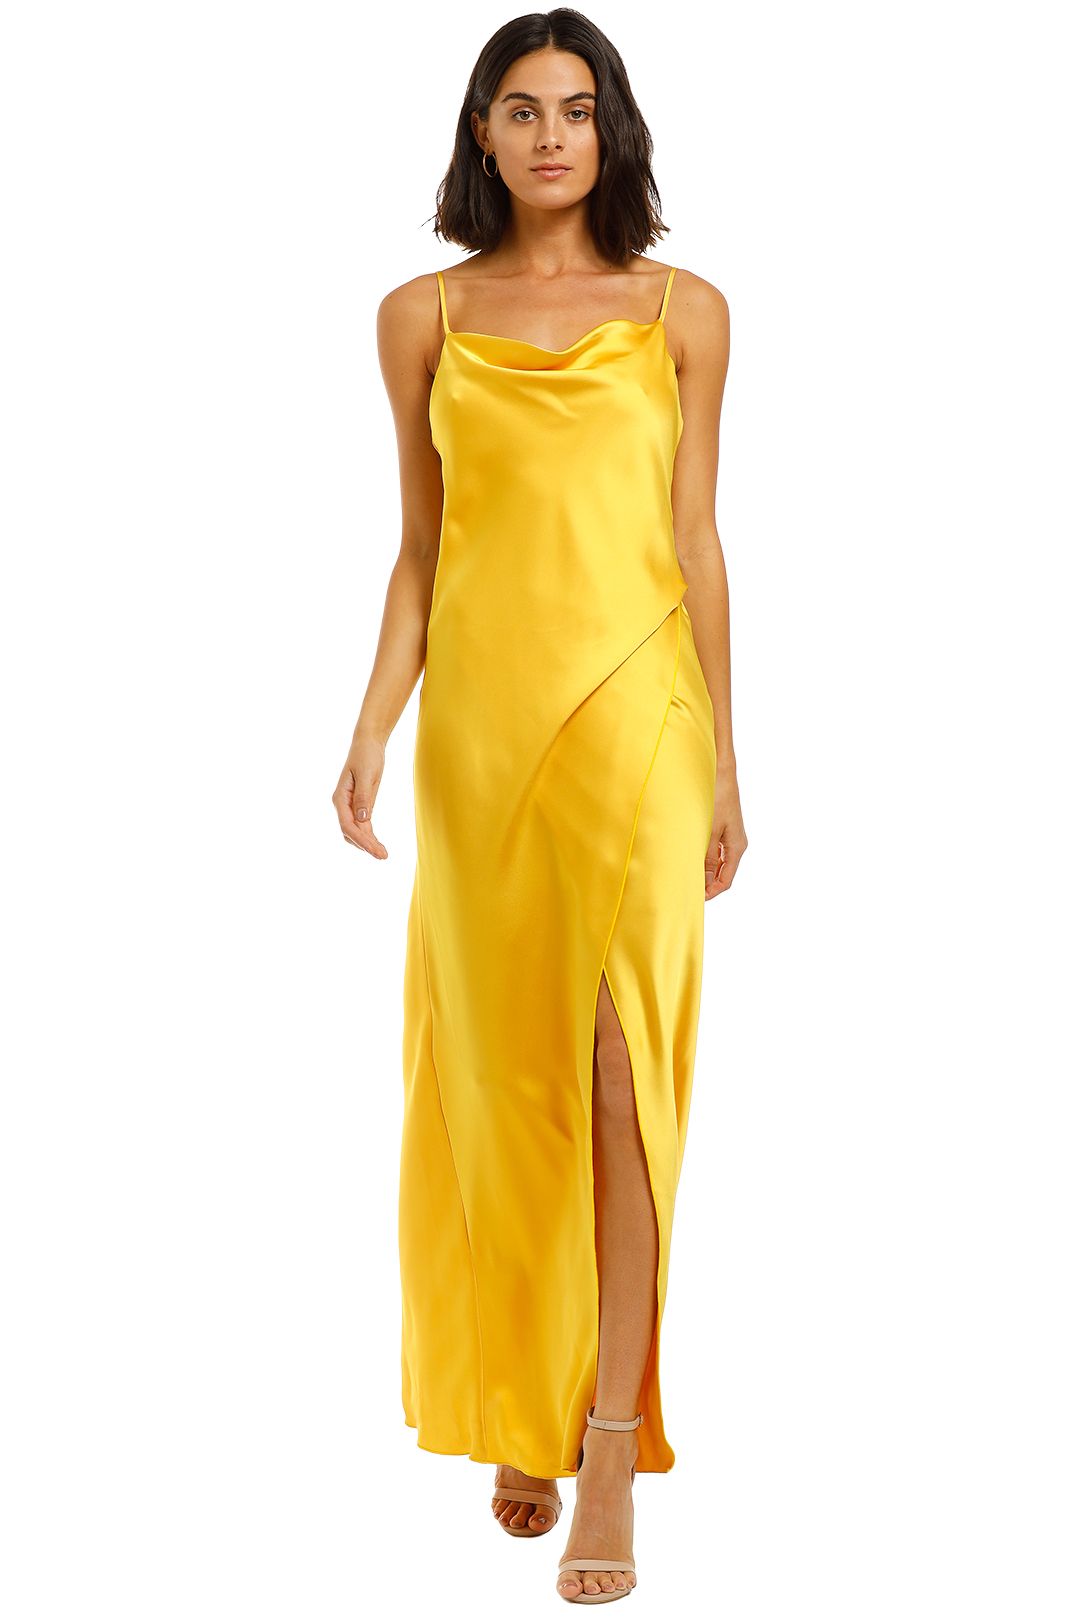 yellow dresses at mr price